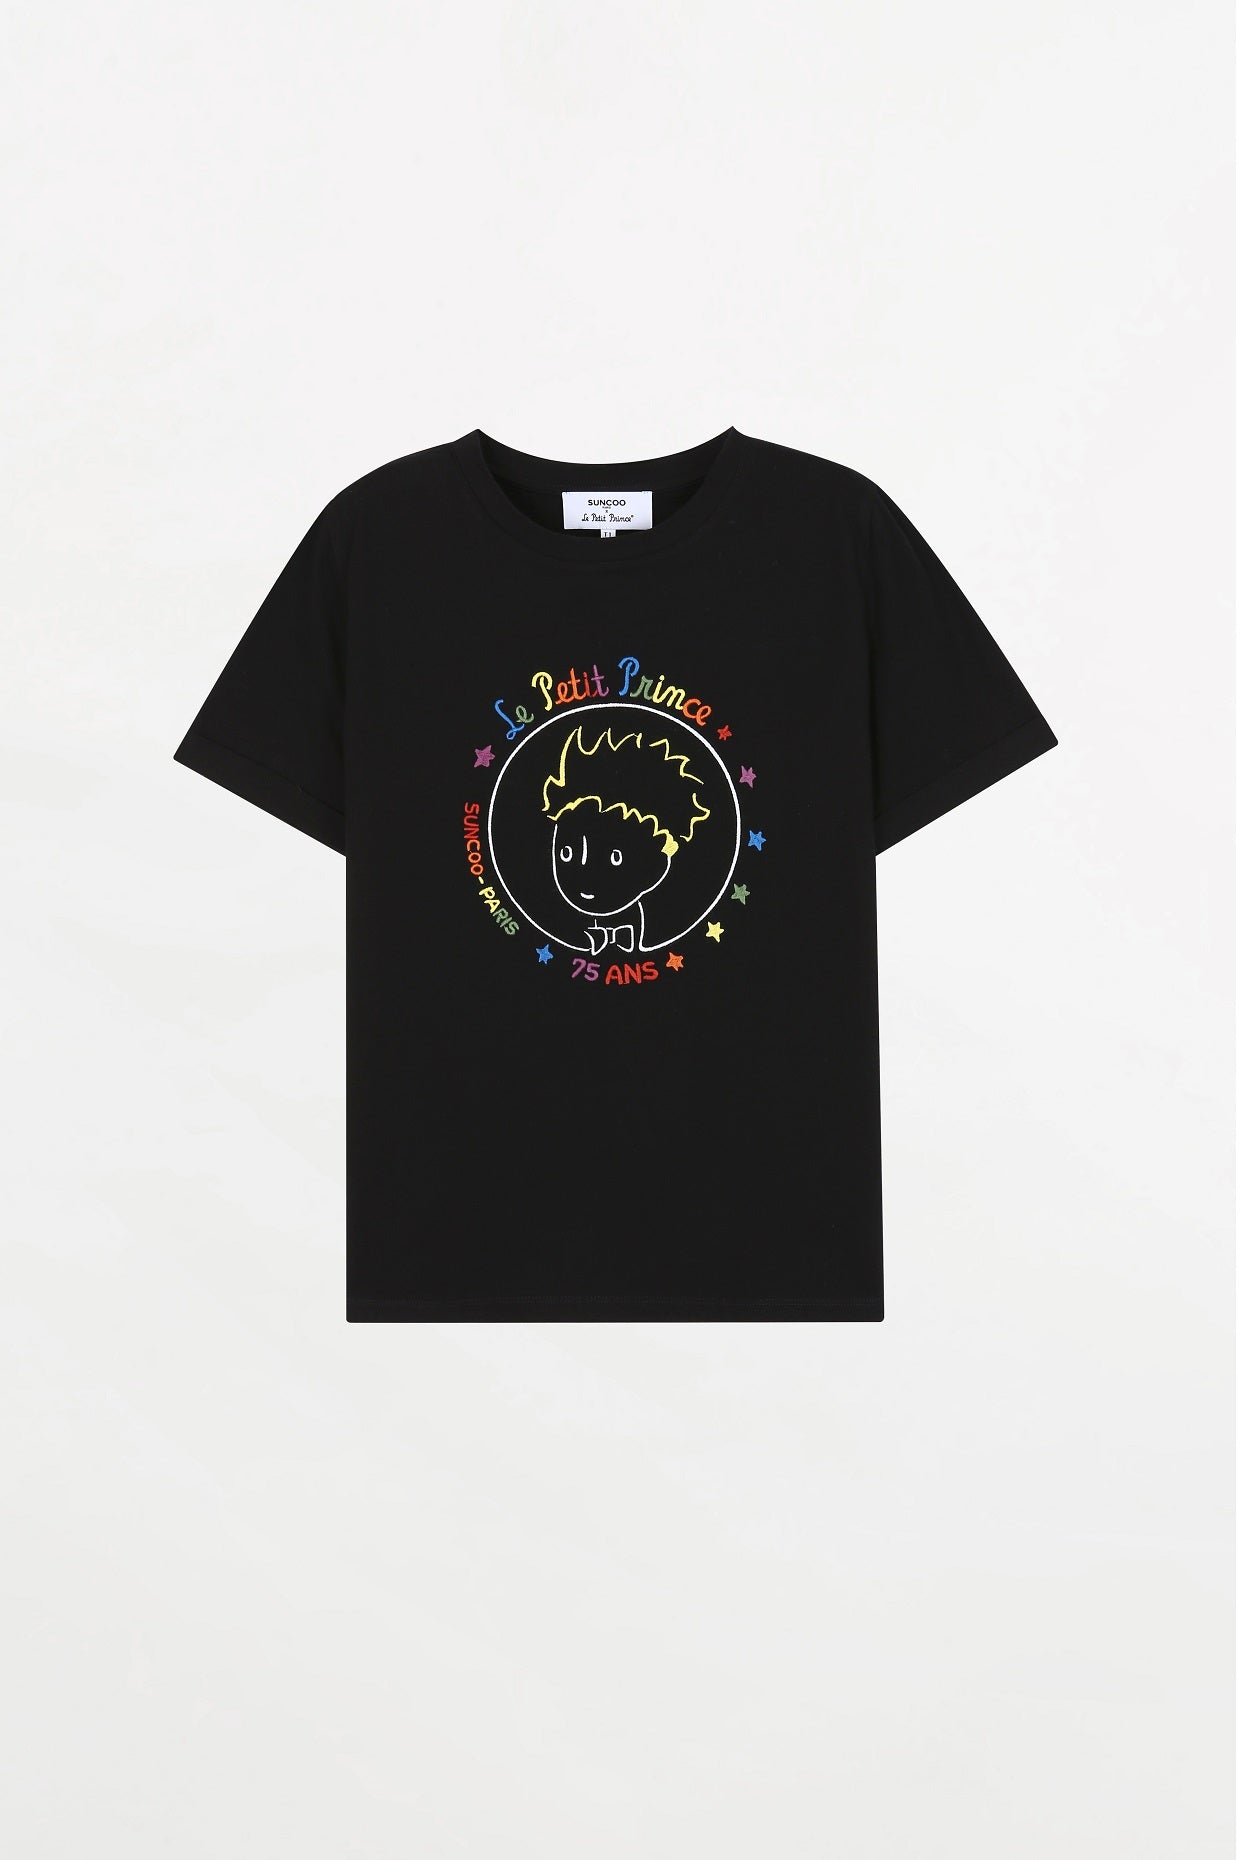 Maelo Black T Shirt Printing Suncoo Hk